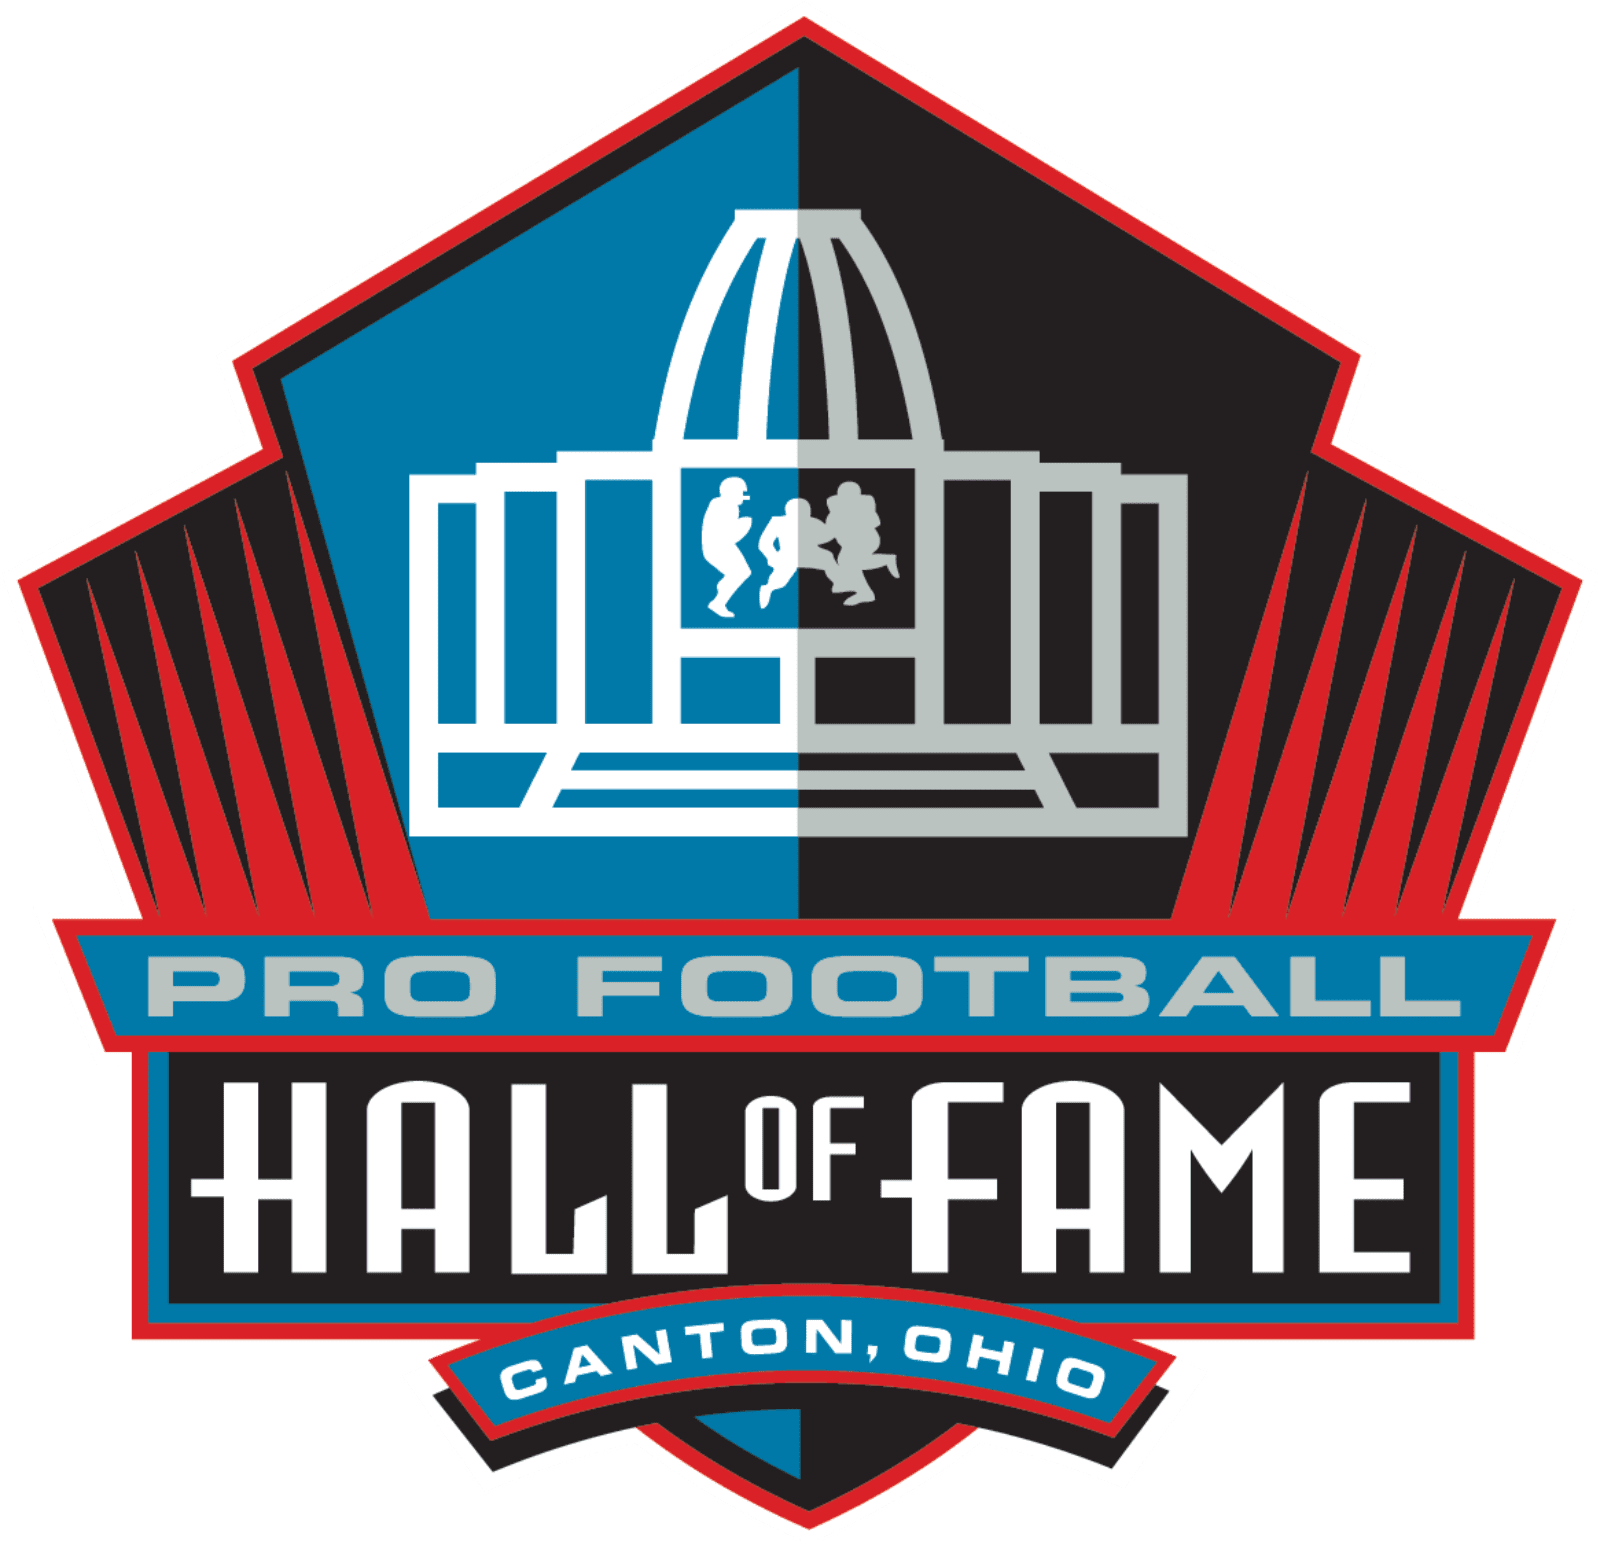 Pro Football Hall of Fame, Canton Ohio